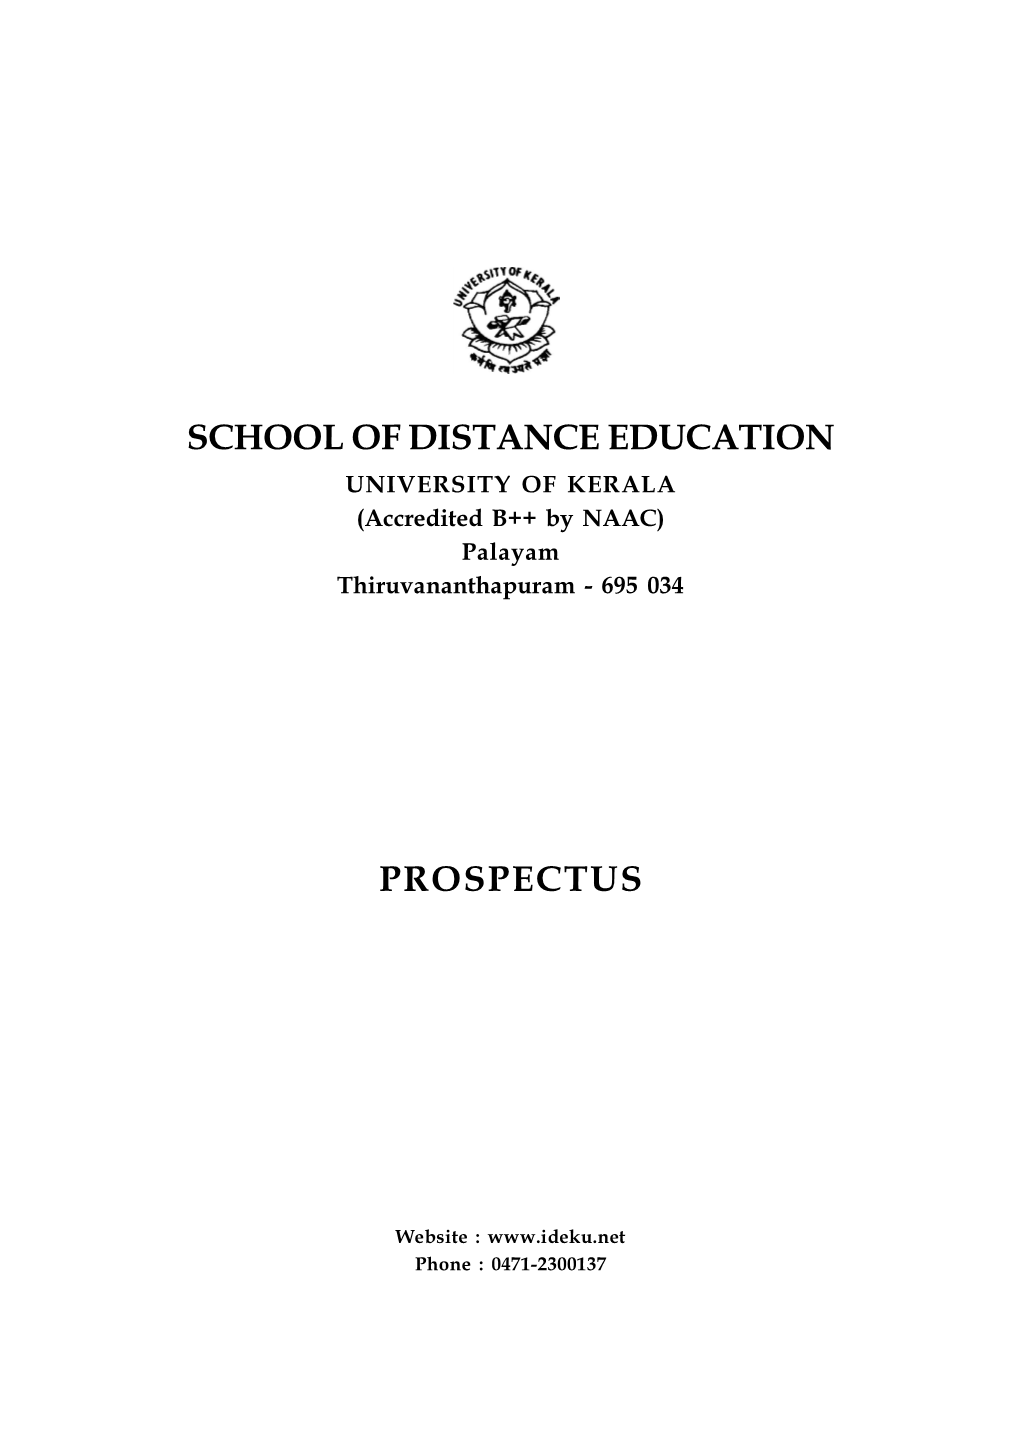 Kerala University School of Distance Education Prospectus.Pdf